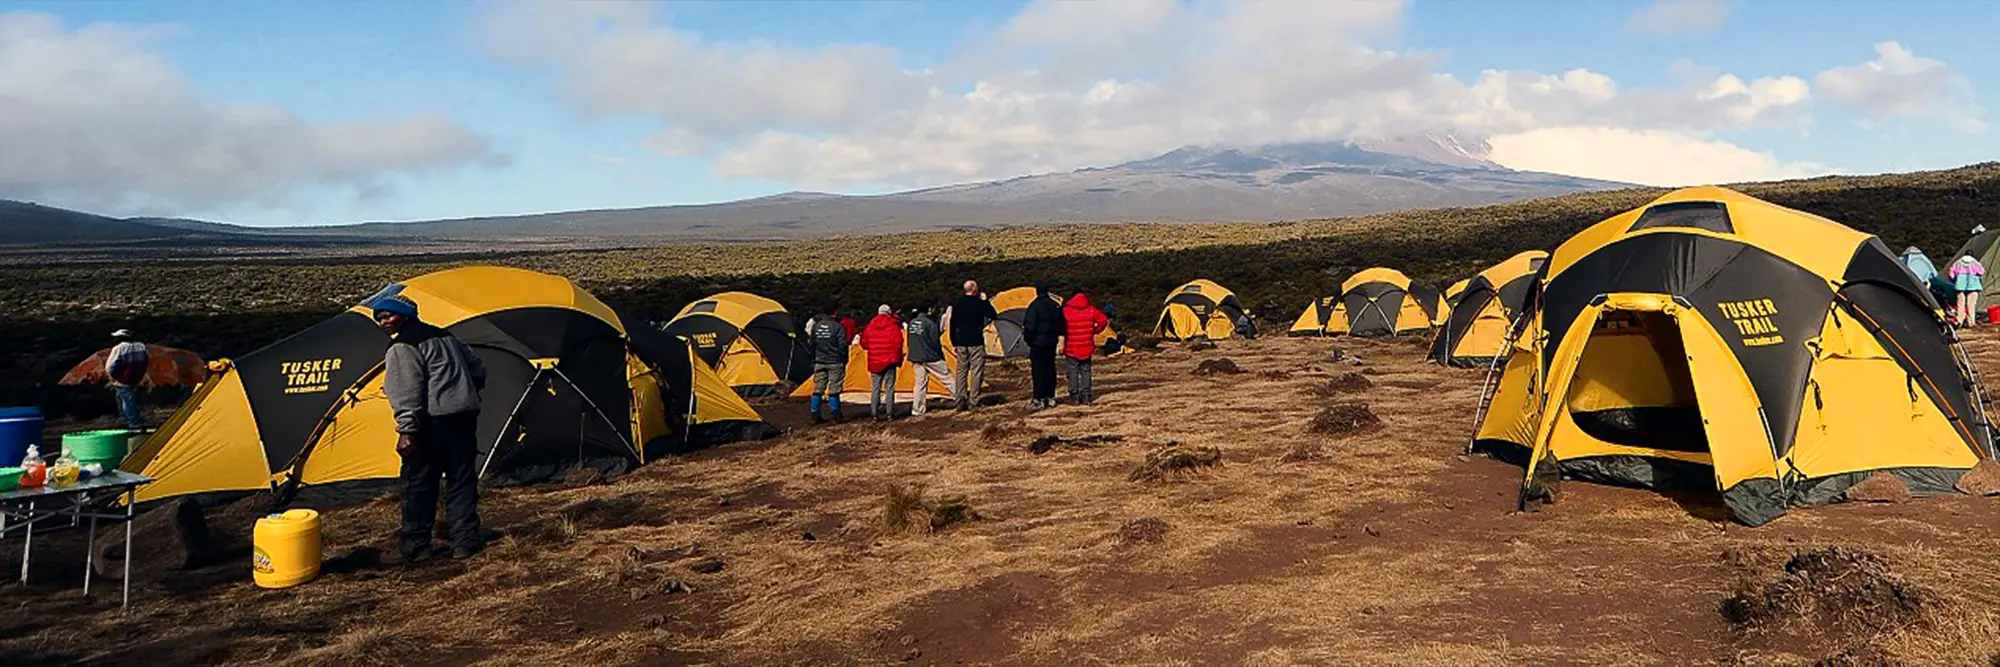 What to expect when climbing mount kilimanjaro